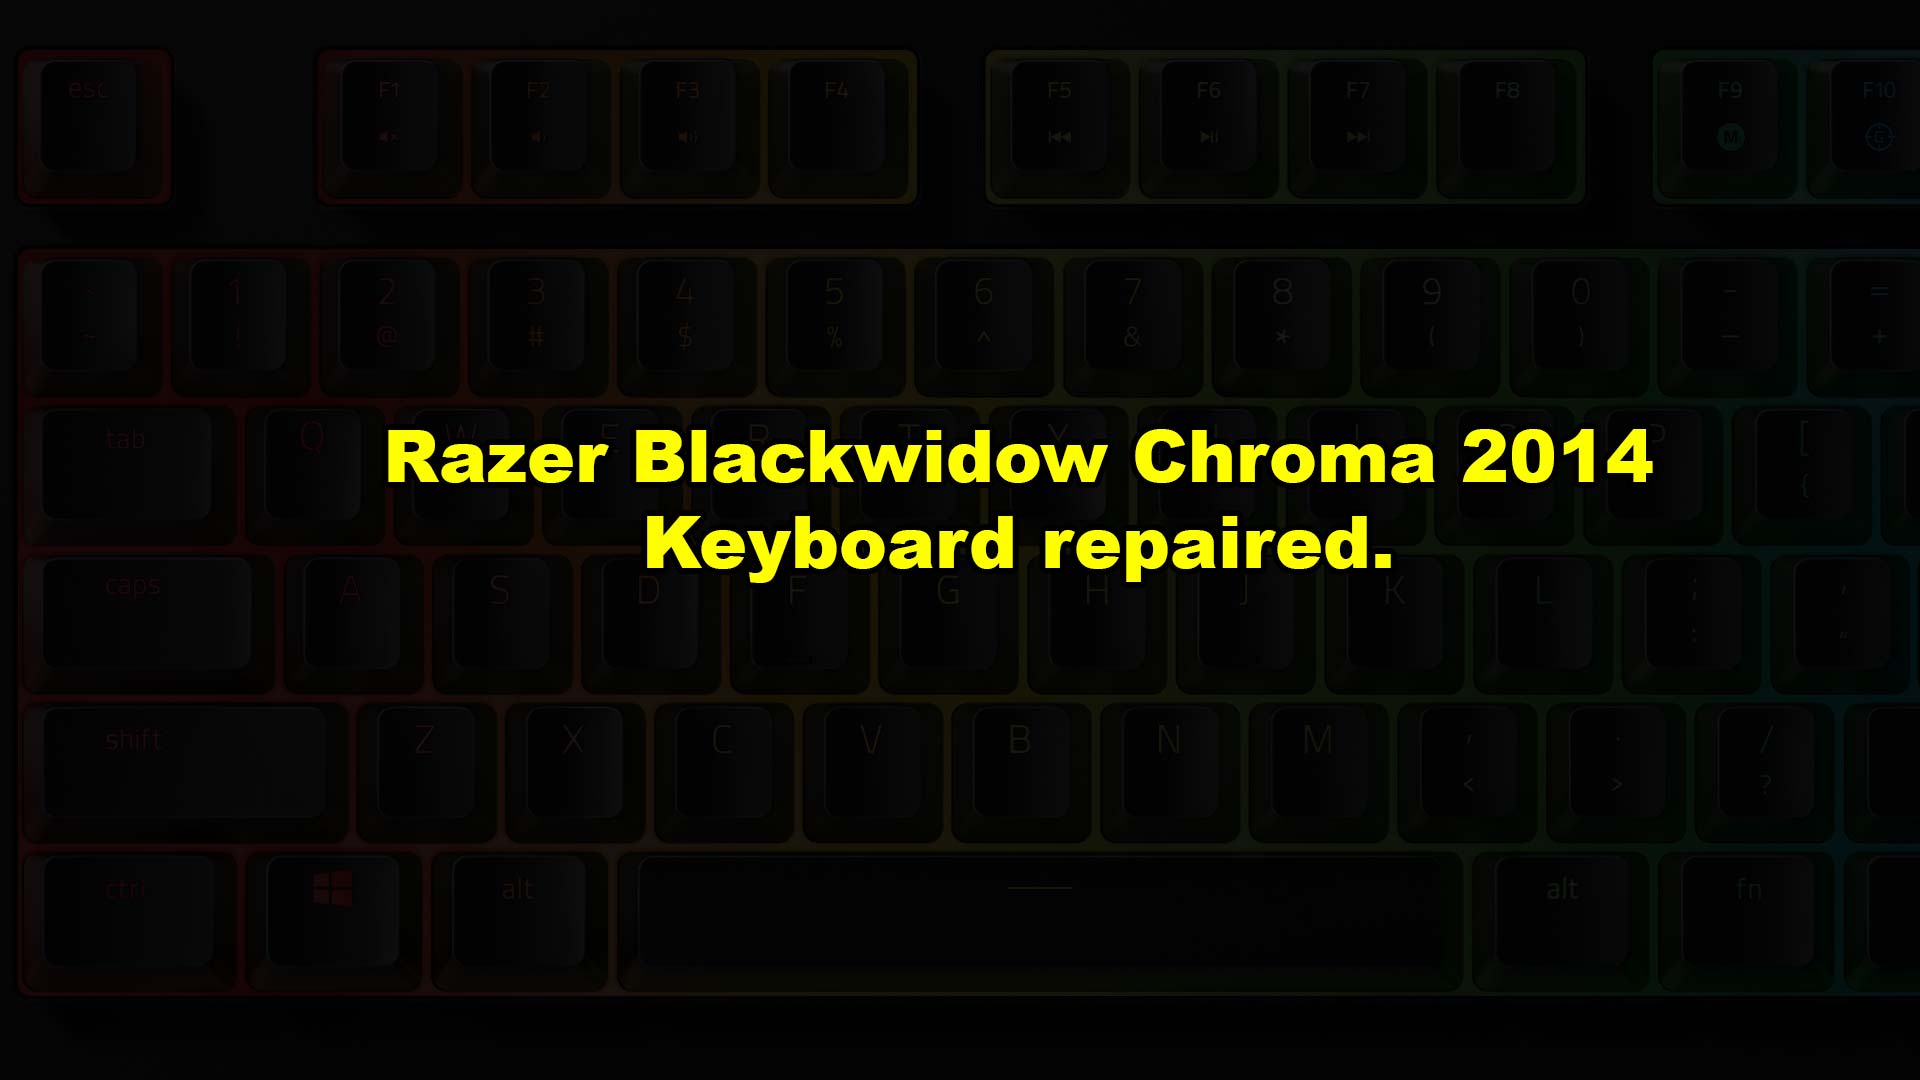 Razer Blackwidow Chroma - Keyboard test passed video